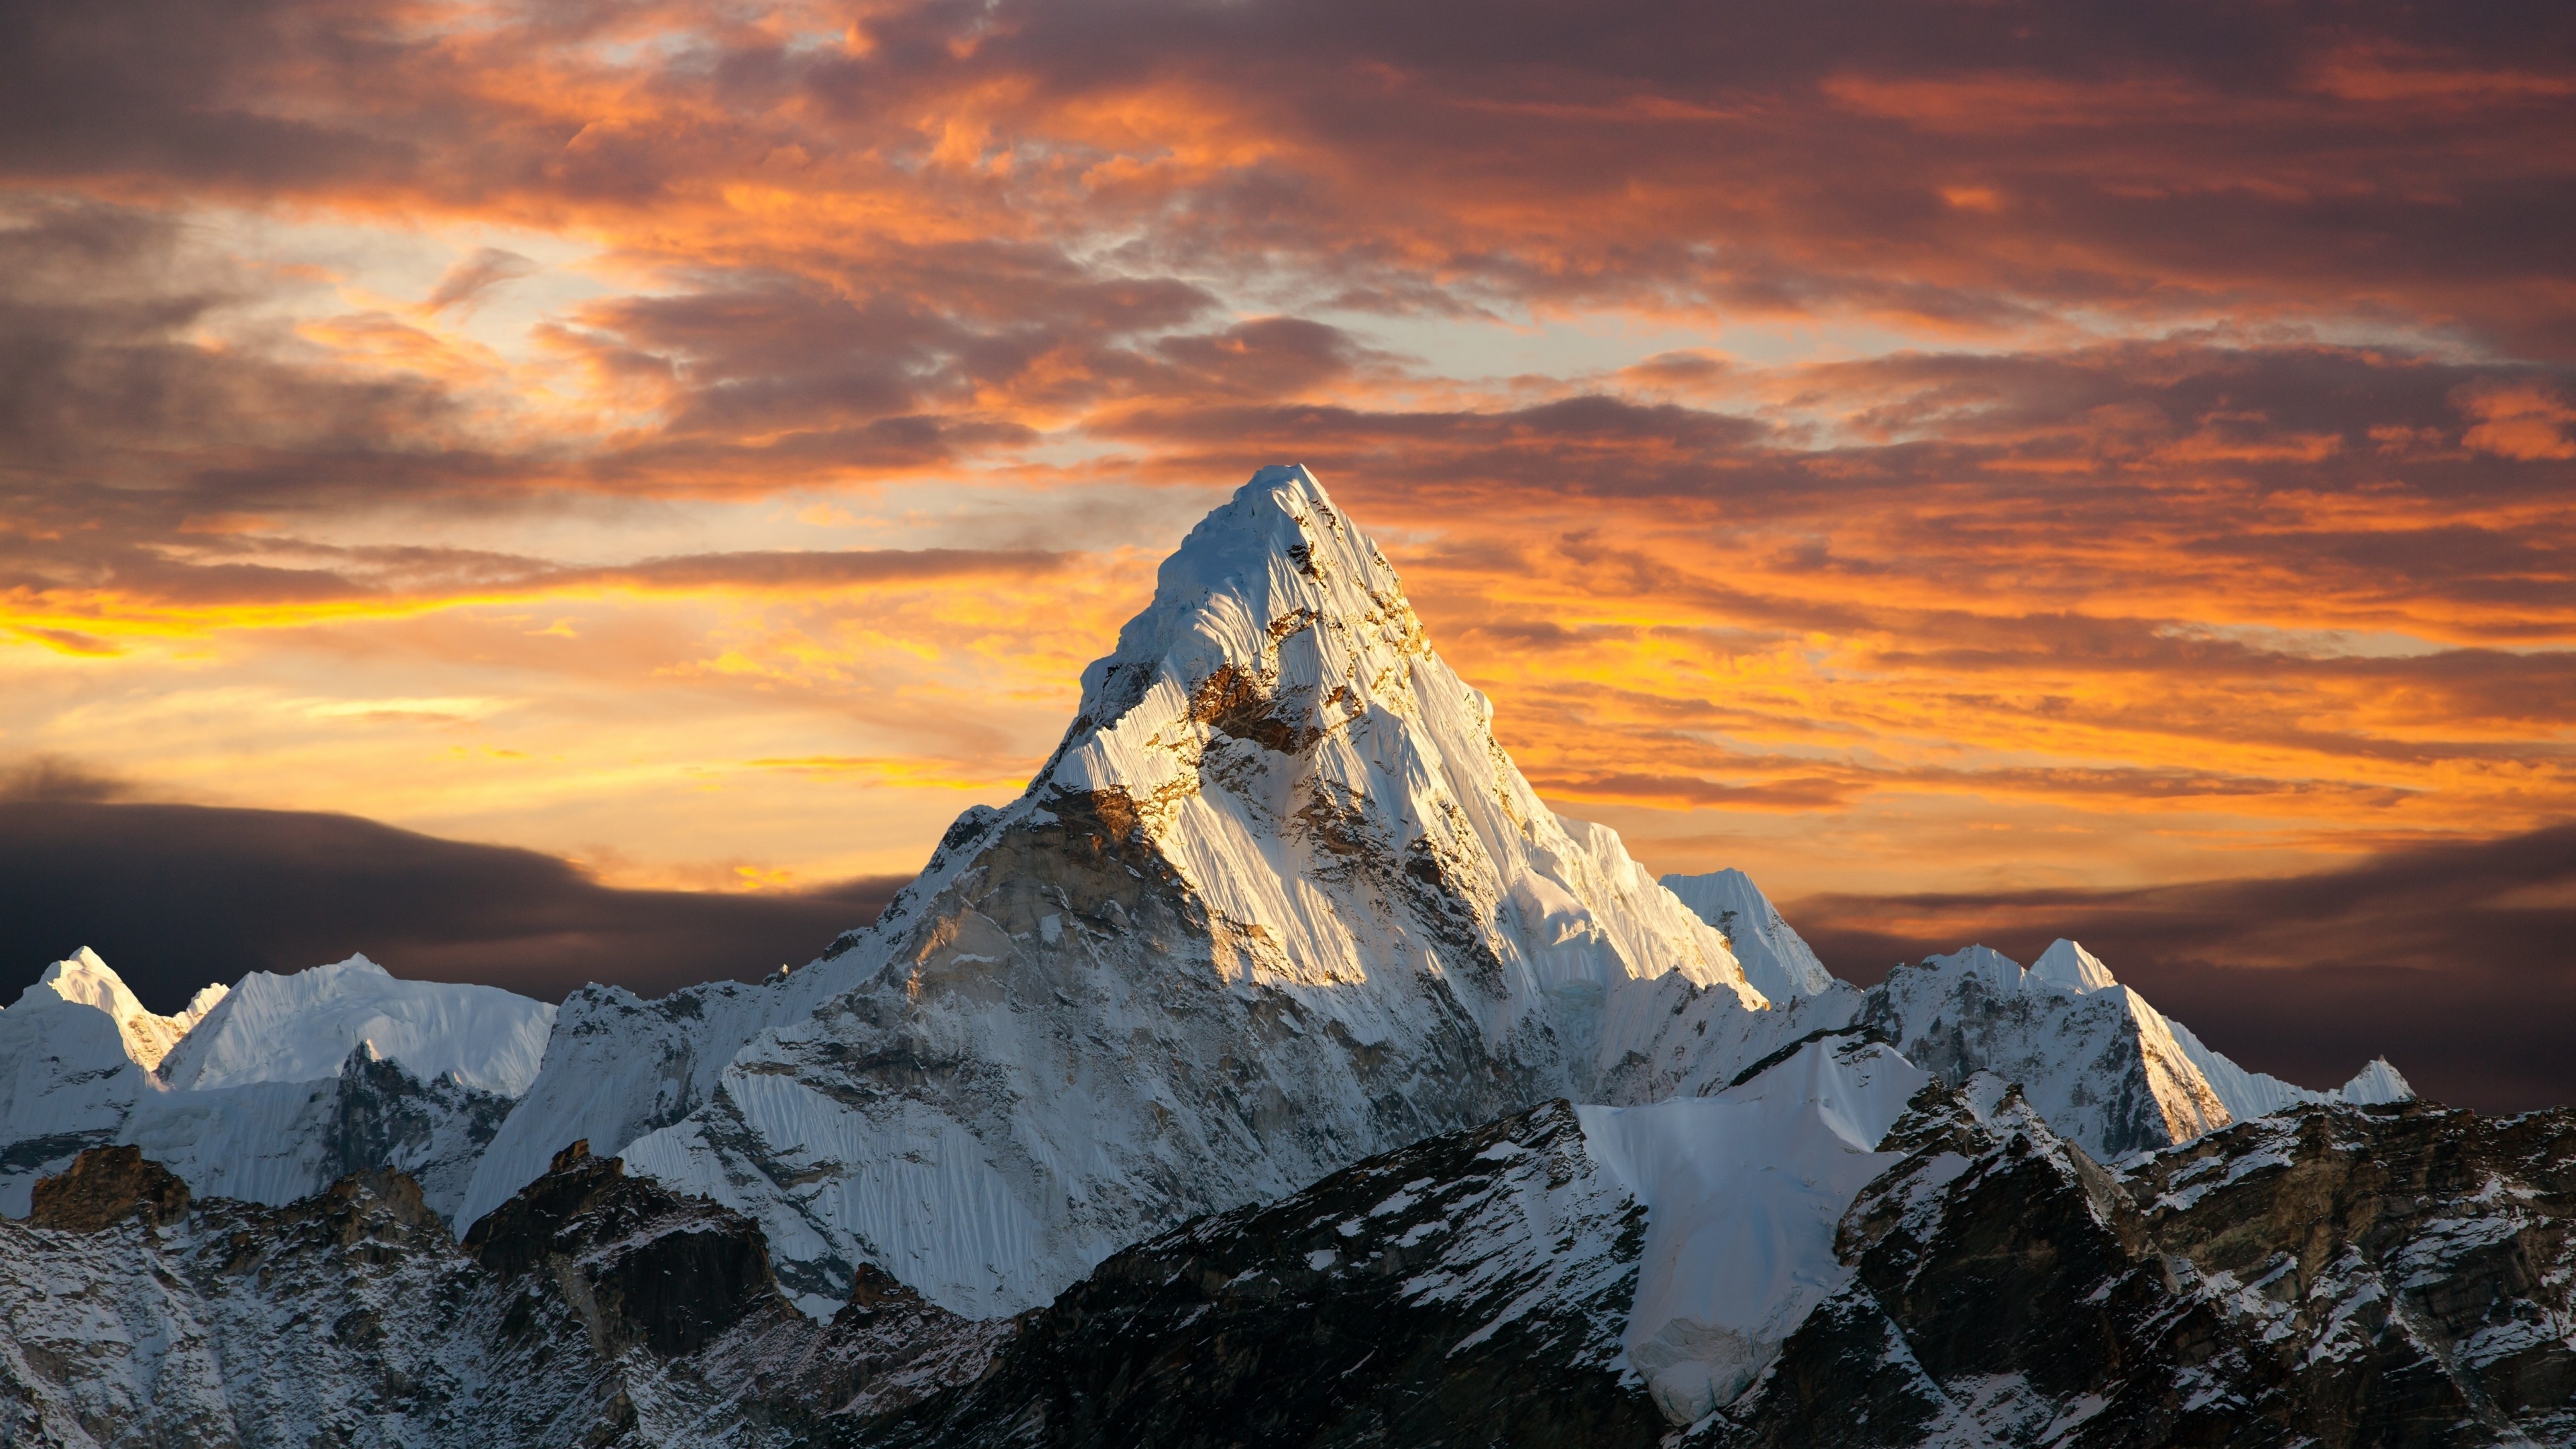 Download 3840x2160 Mountain, Sunset, Snow, Clouds, Landscape